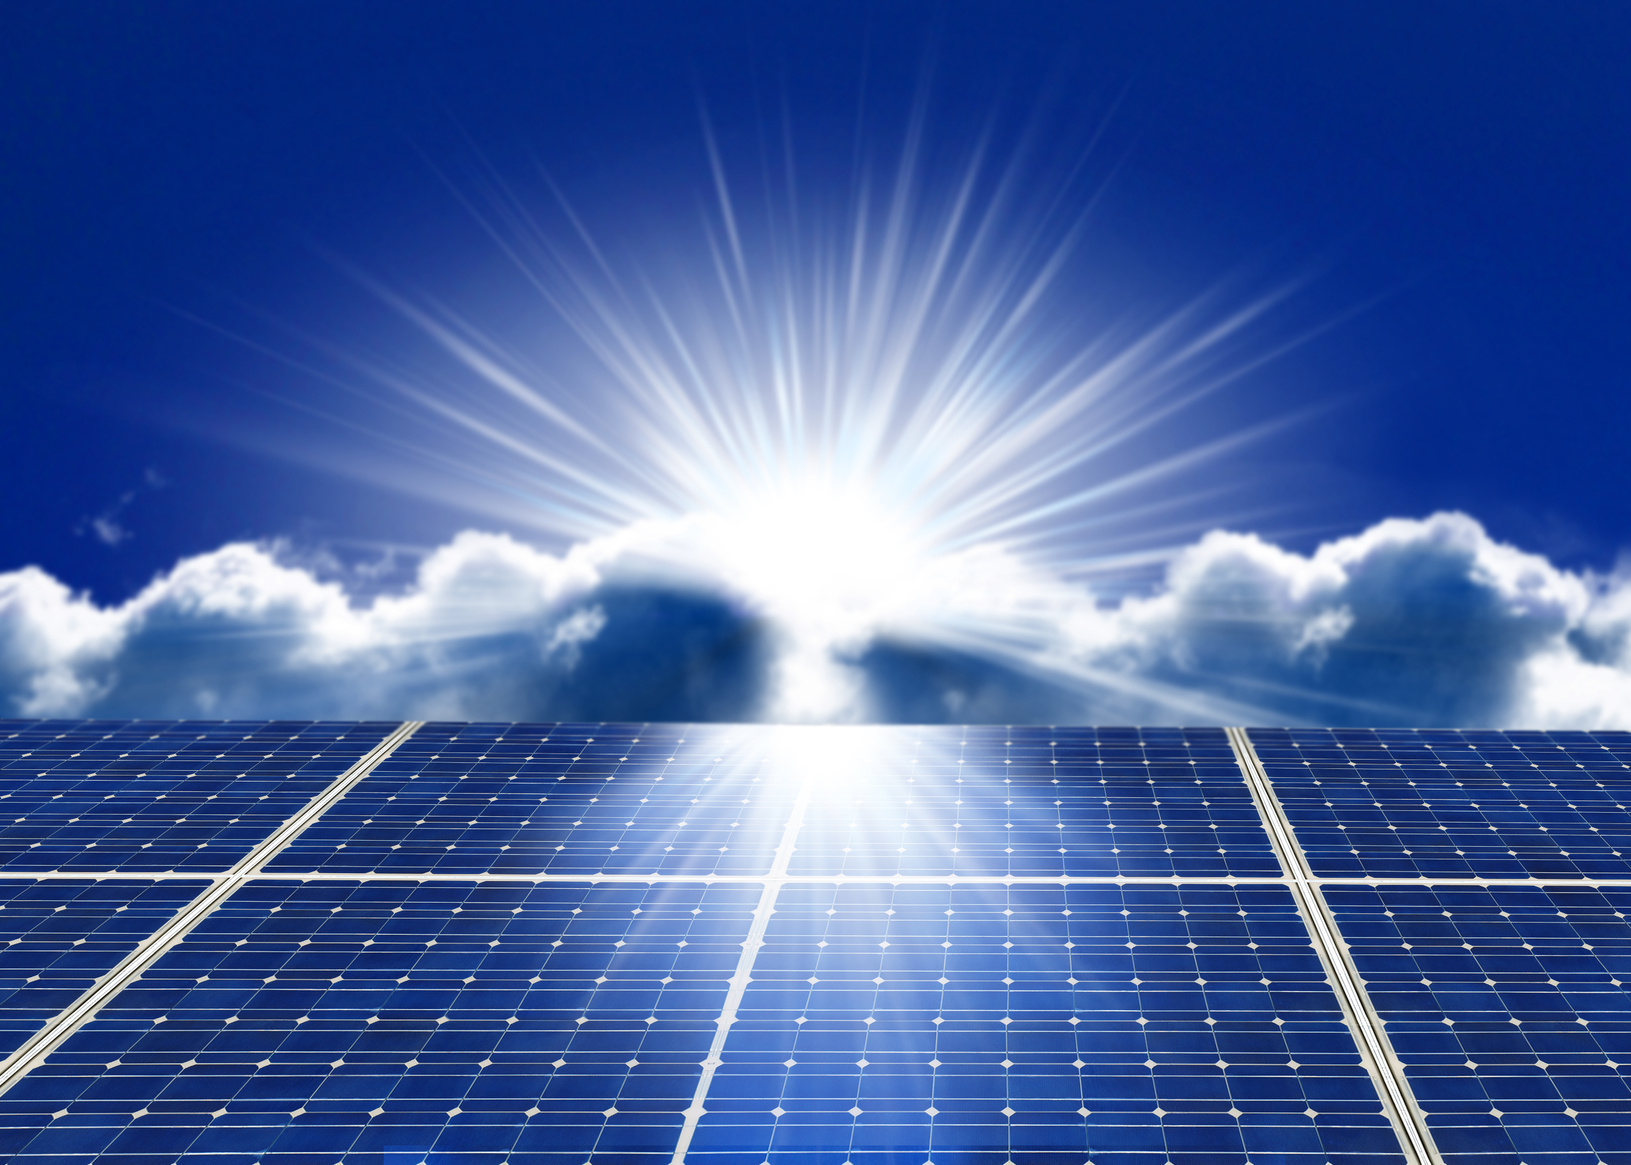 Soluciones Agropecuarias en Energía Solar, Cercas Eléctricas e Inseminación Artificial